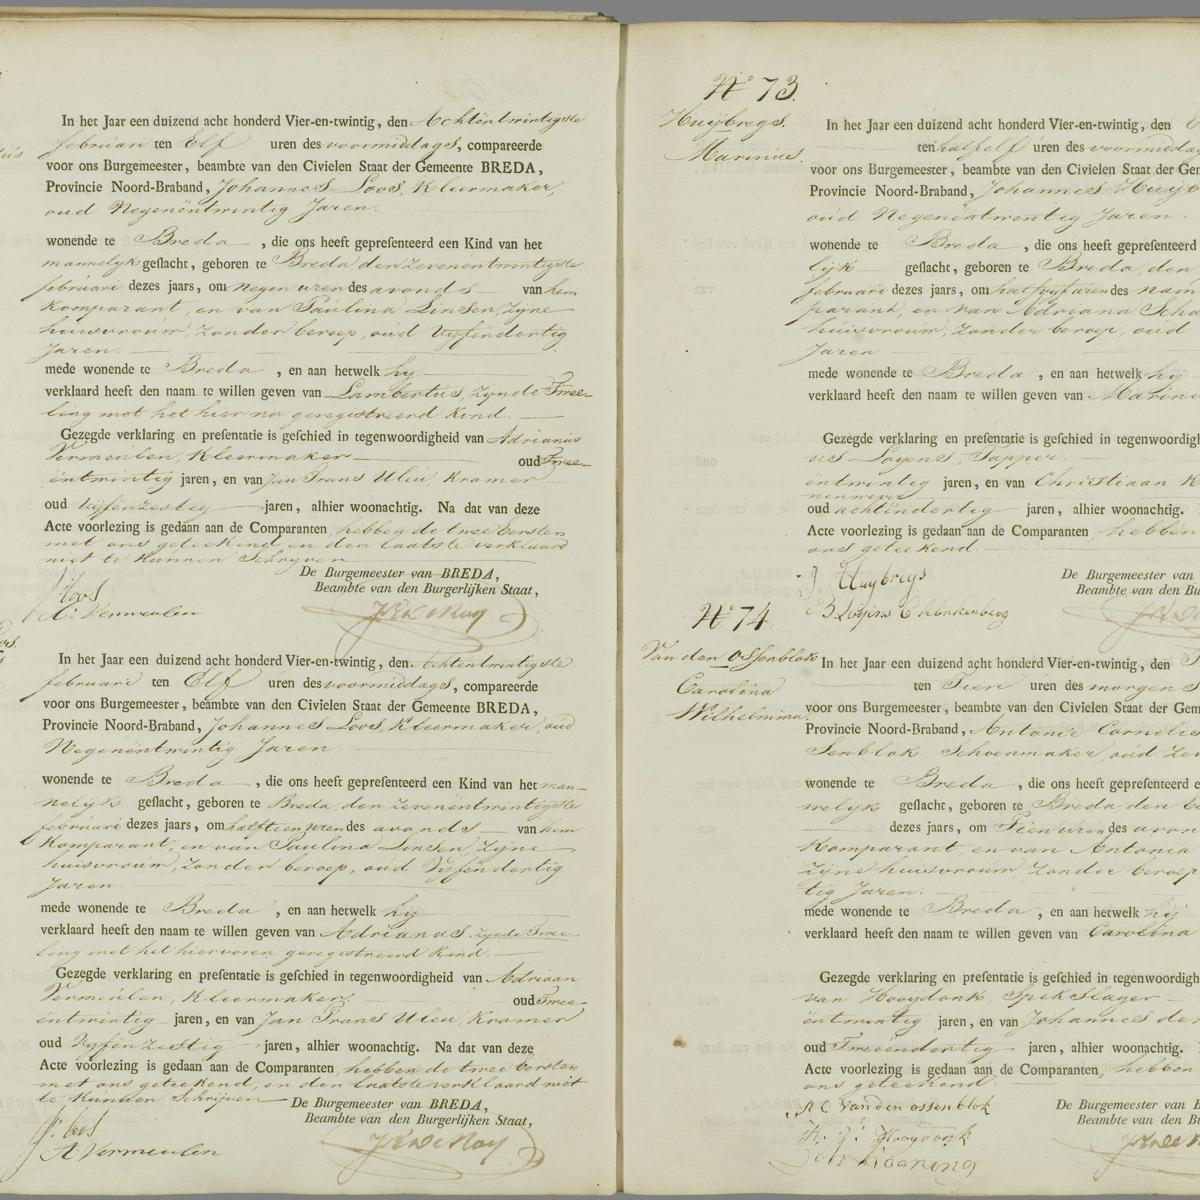 Civil registry of births, Breda, 1824, records 71-74